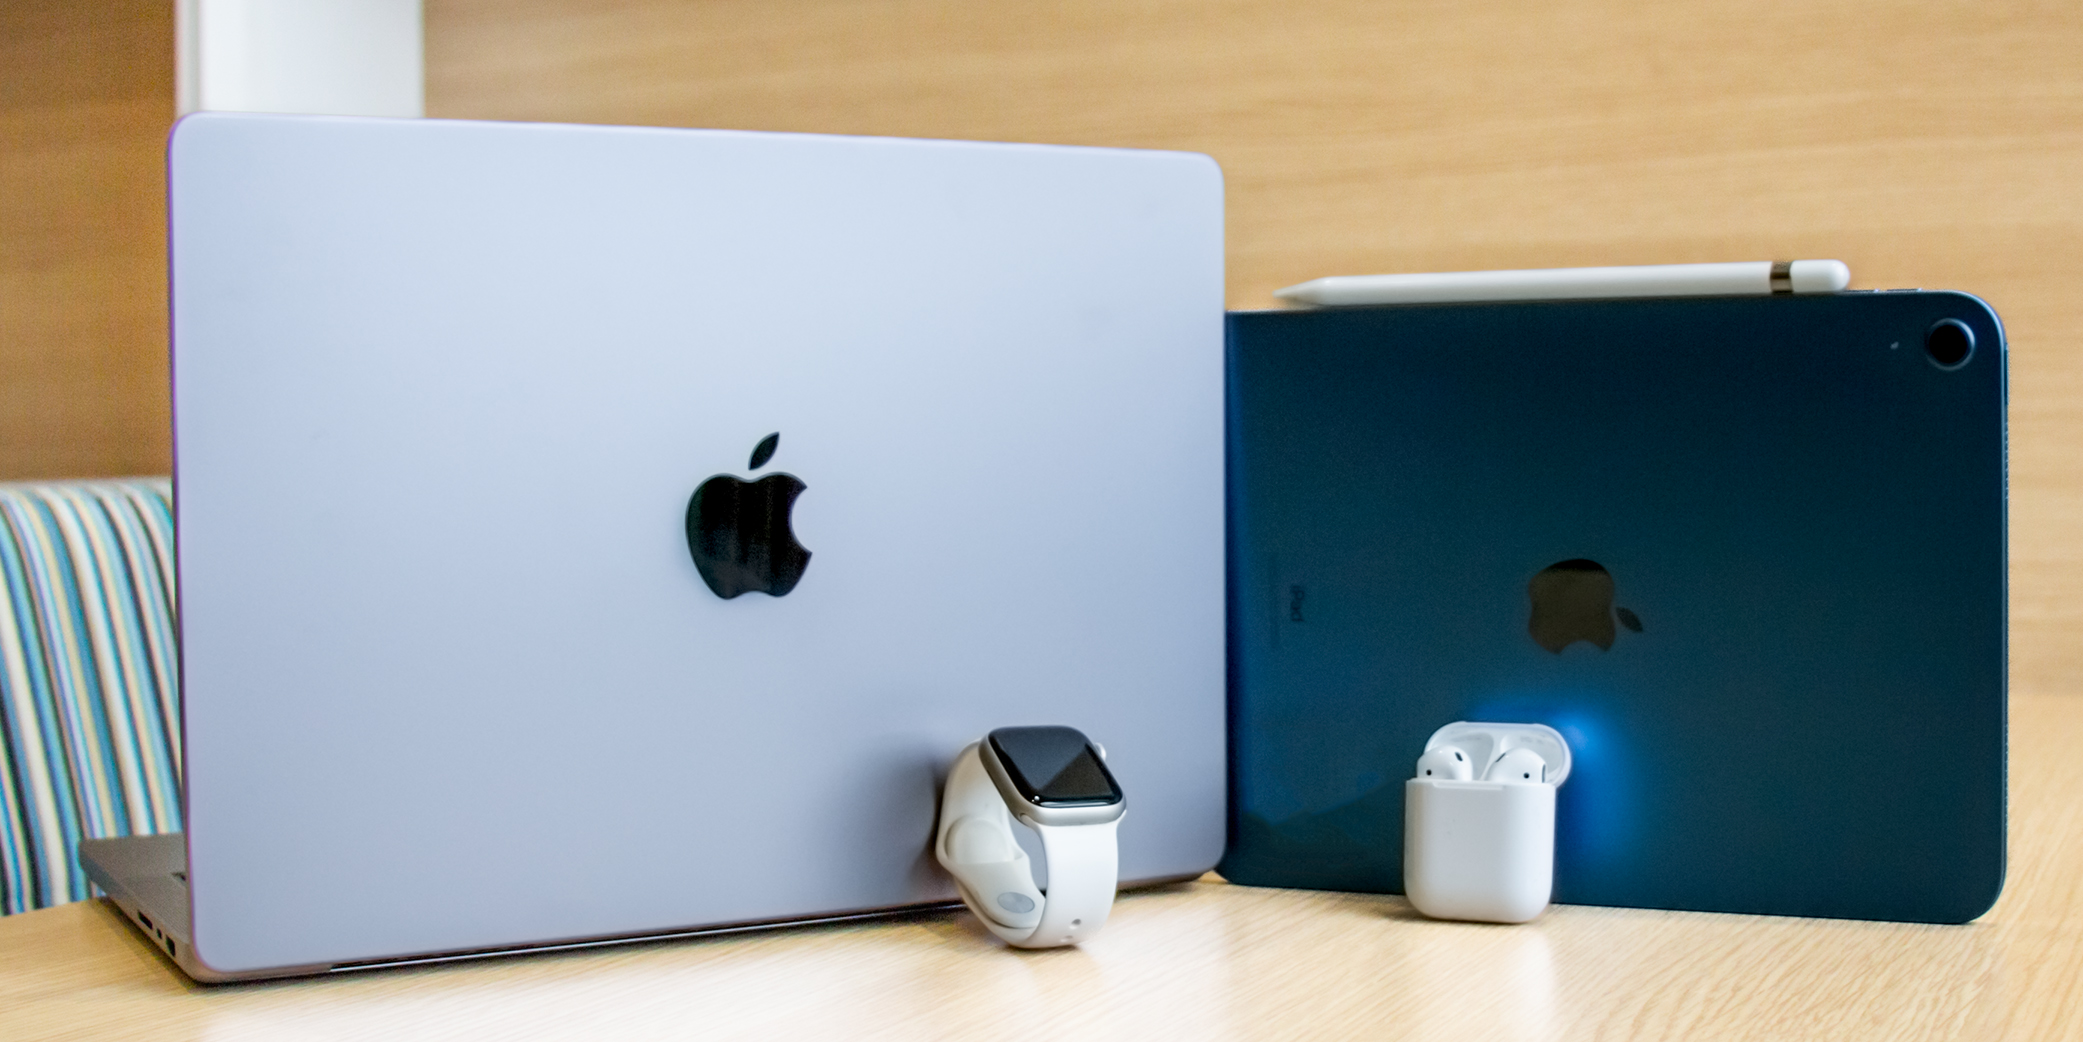 Macbook Pro and ipad